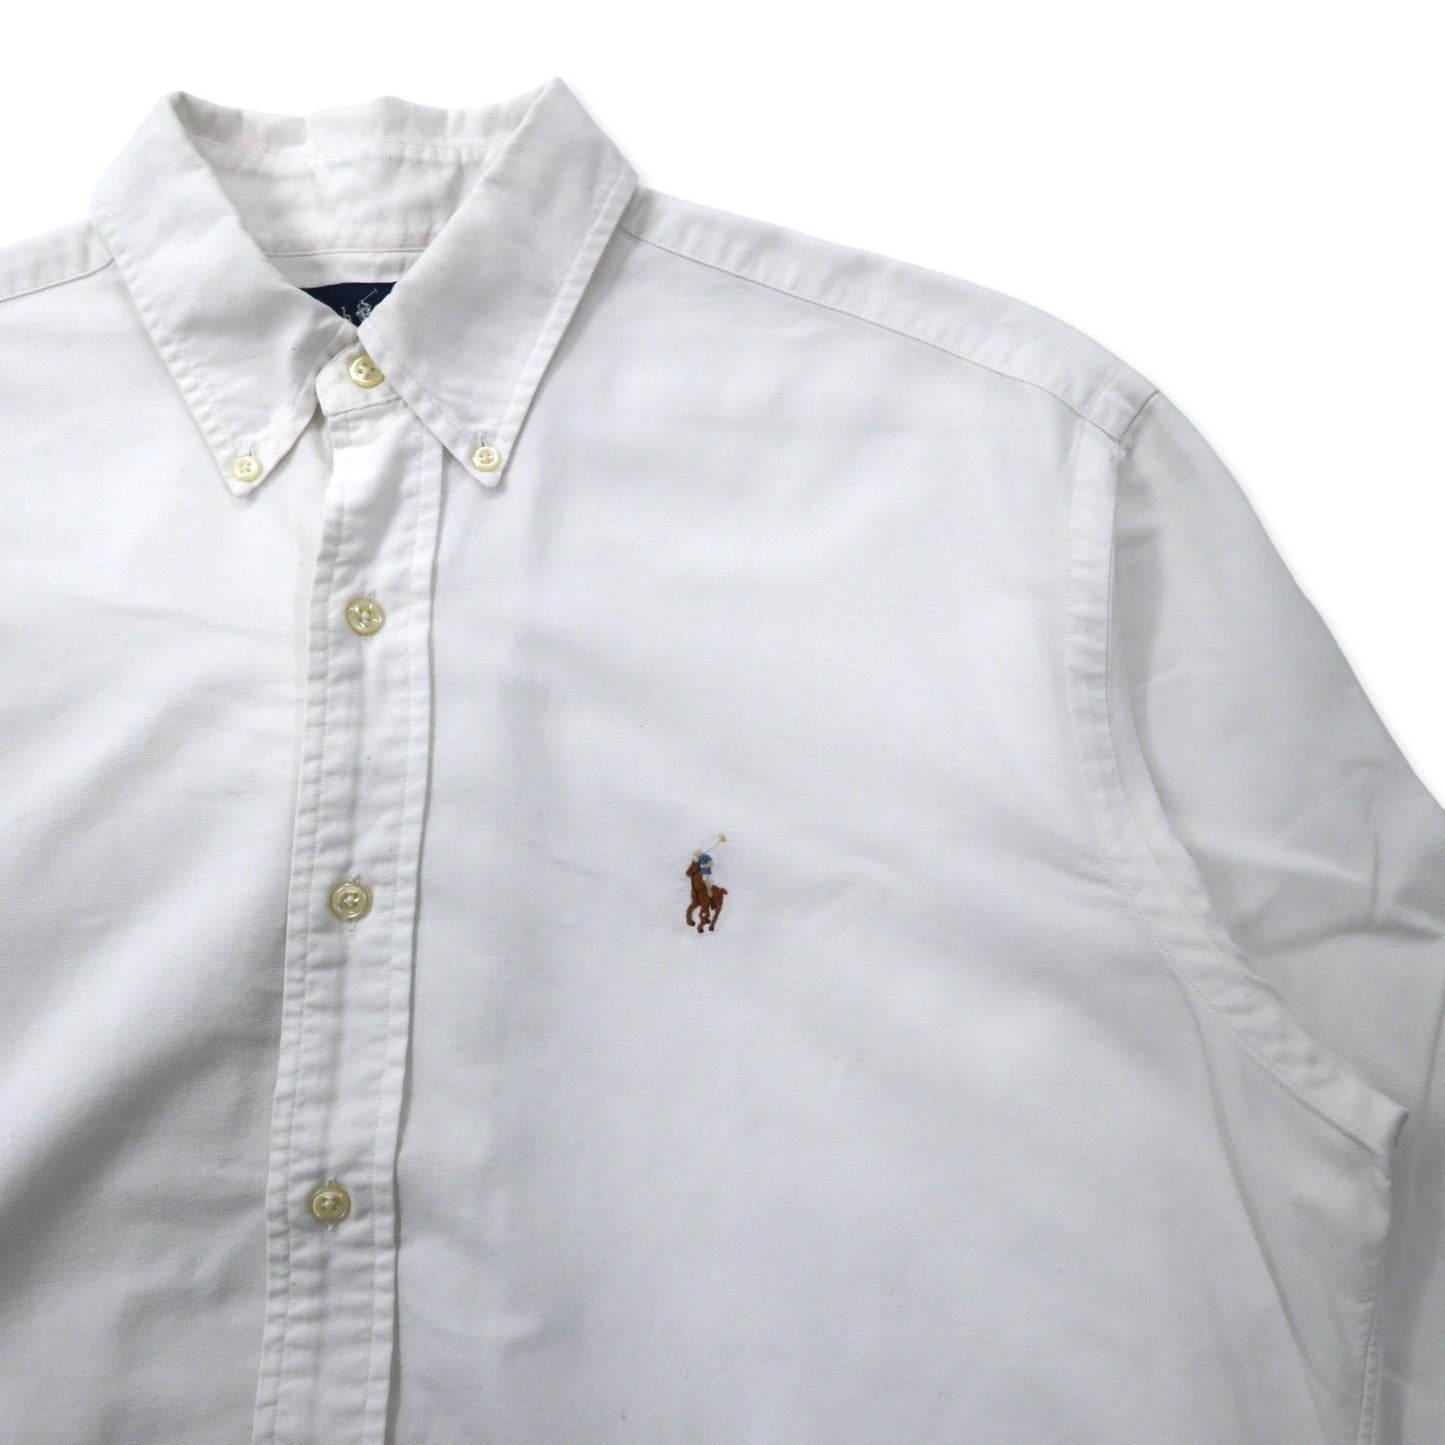 Ralph Lauren オックスフォード ボタンダウンシャツ 15 1/2-35 ホワイト コットン スモールポニー刺繍 YARMOUTH